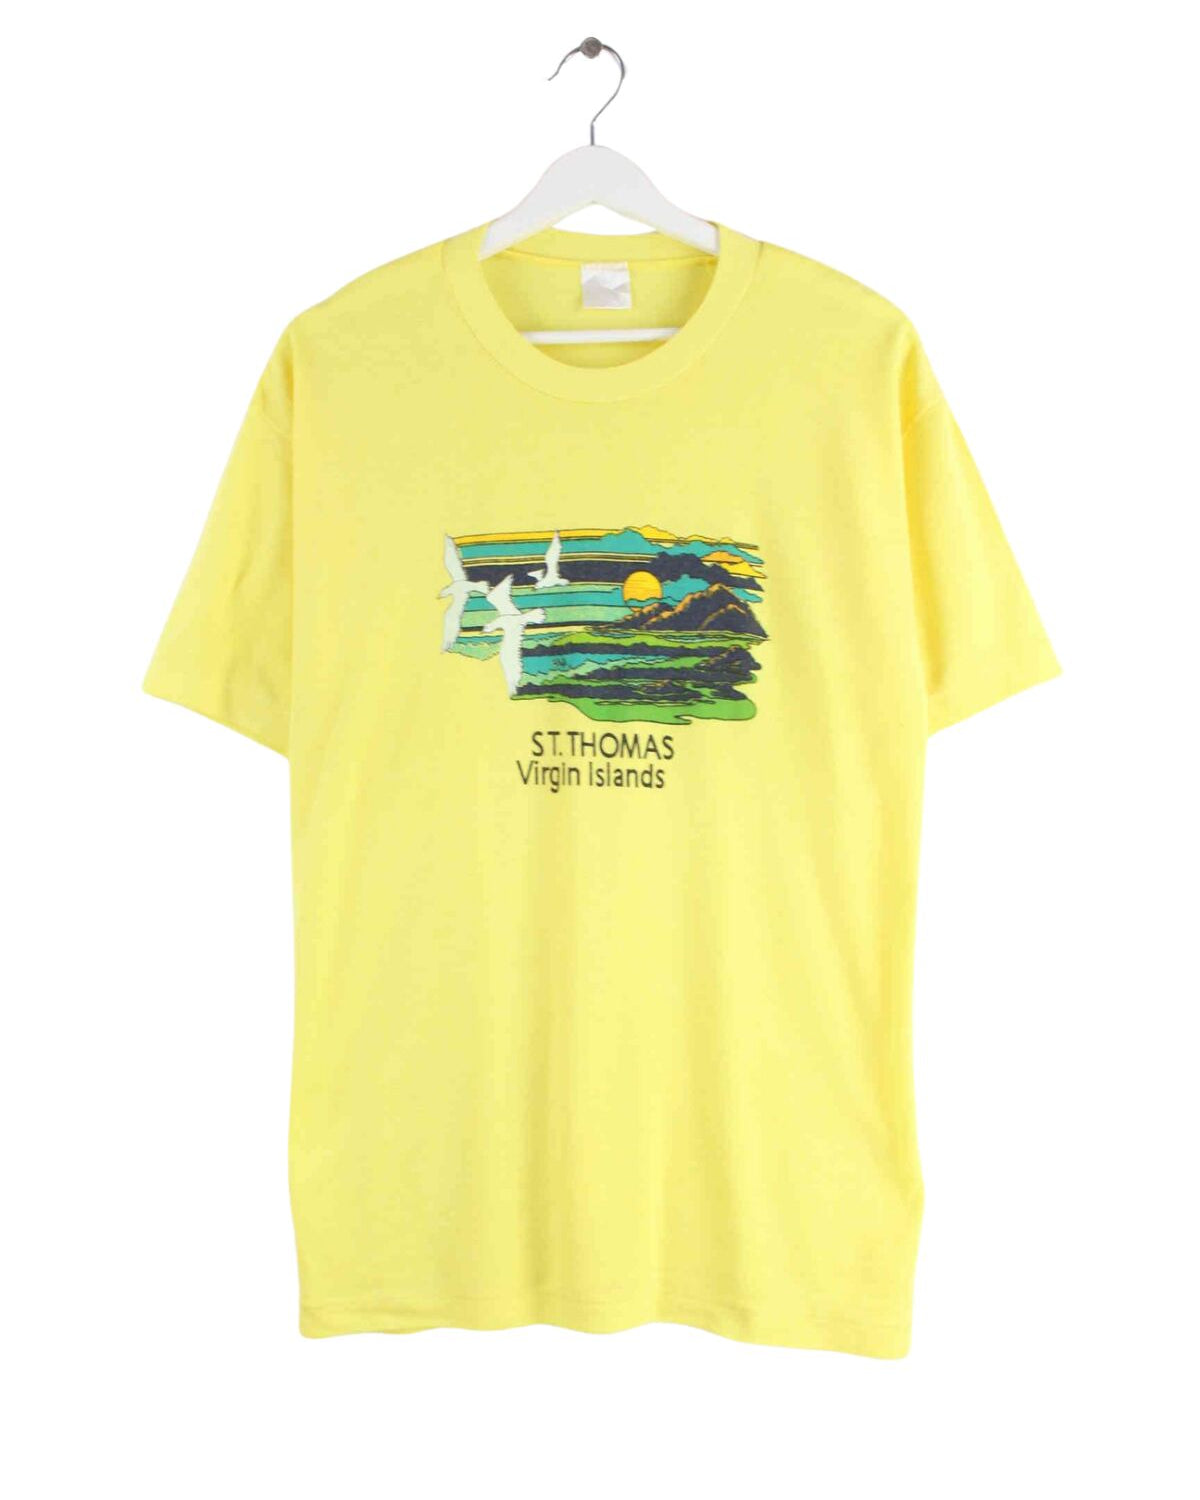 Vintage 80s Virgin Islands Print Single Stitched T-Shirt Gelb M (front image)